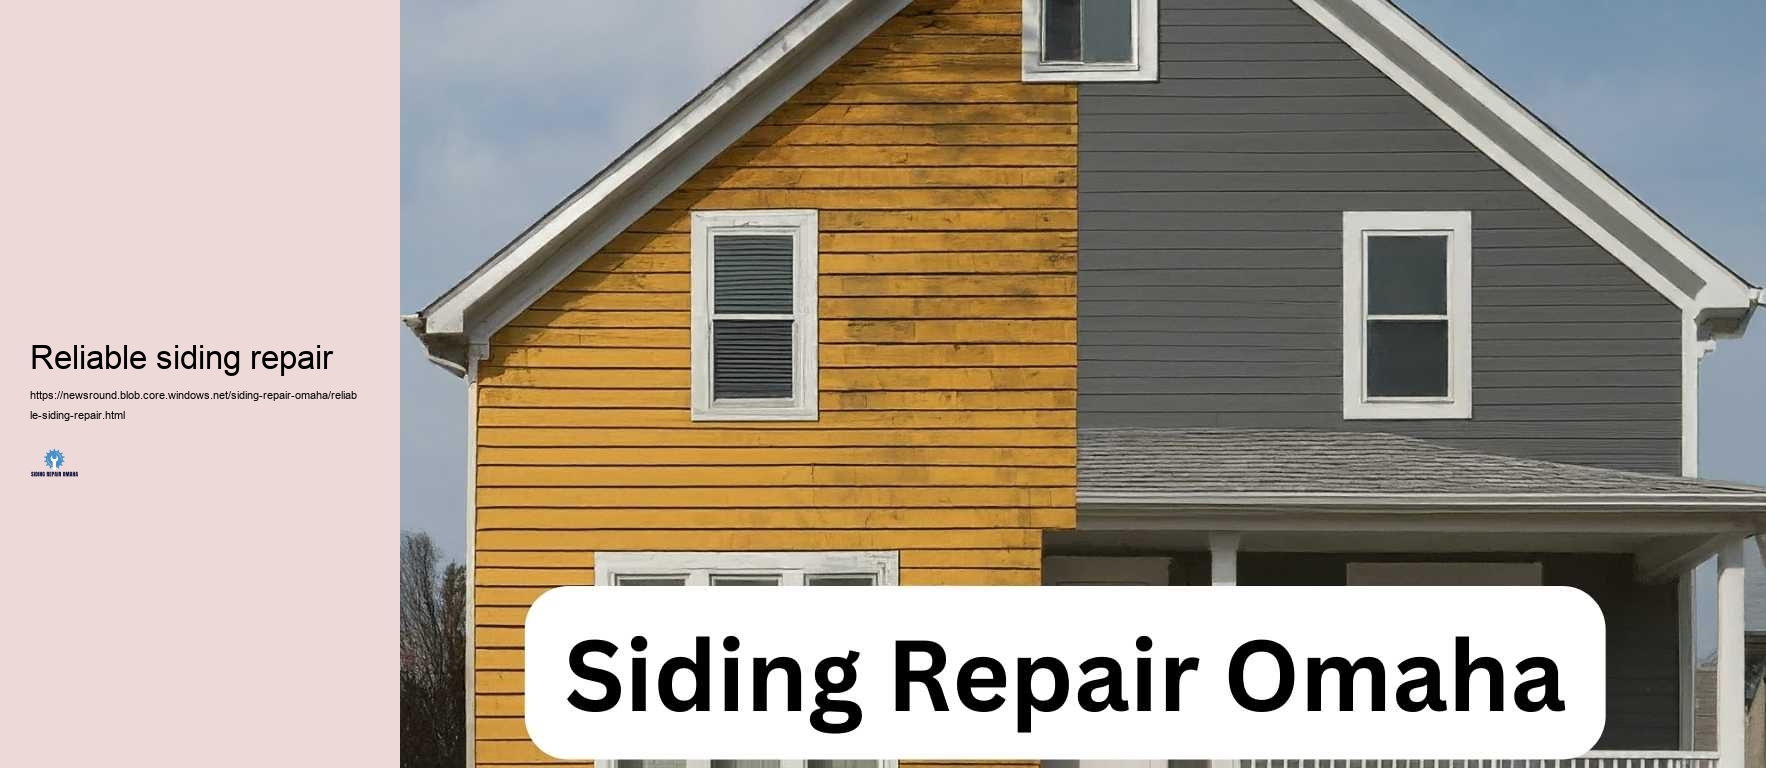 Reliable siding repair